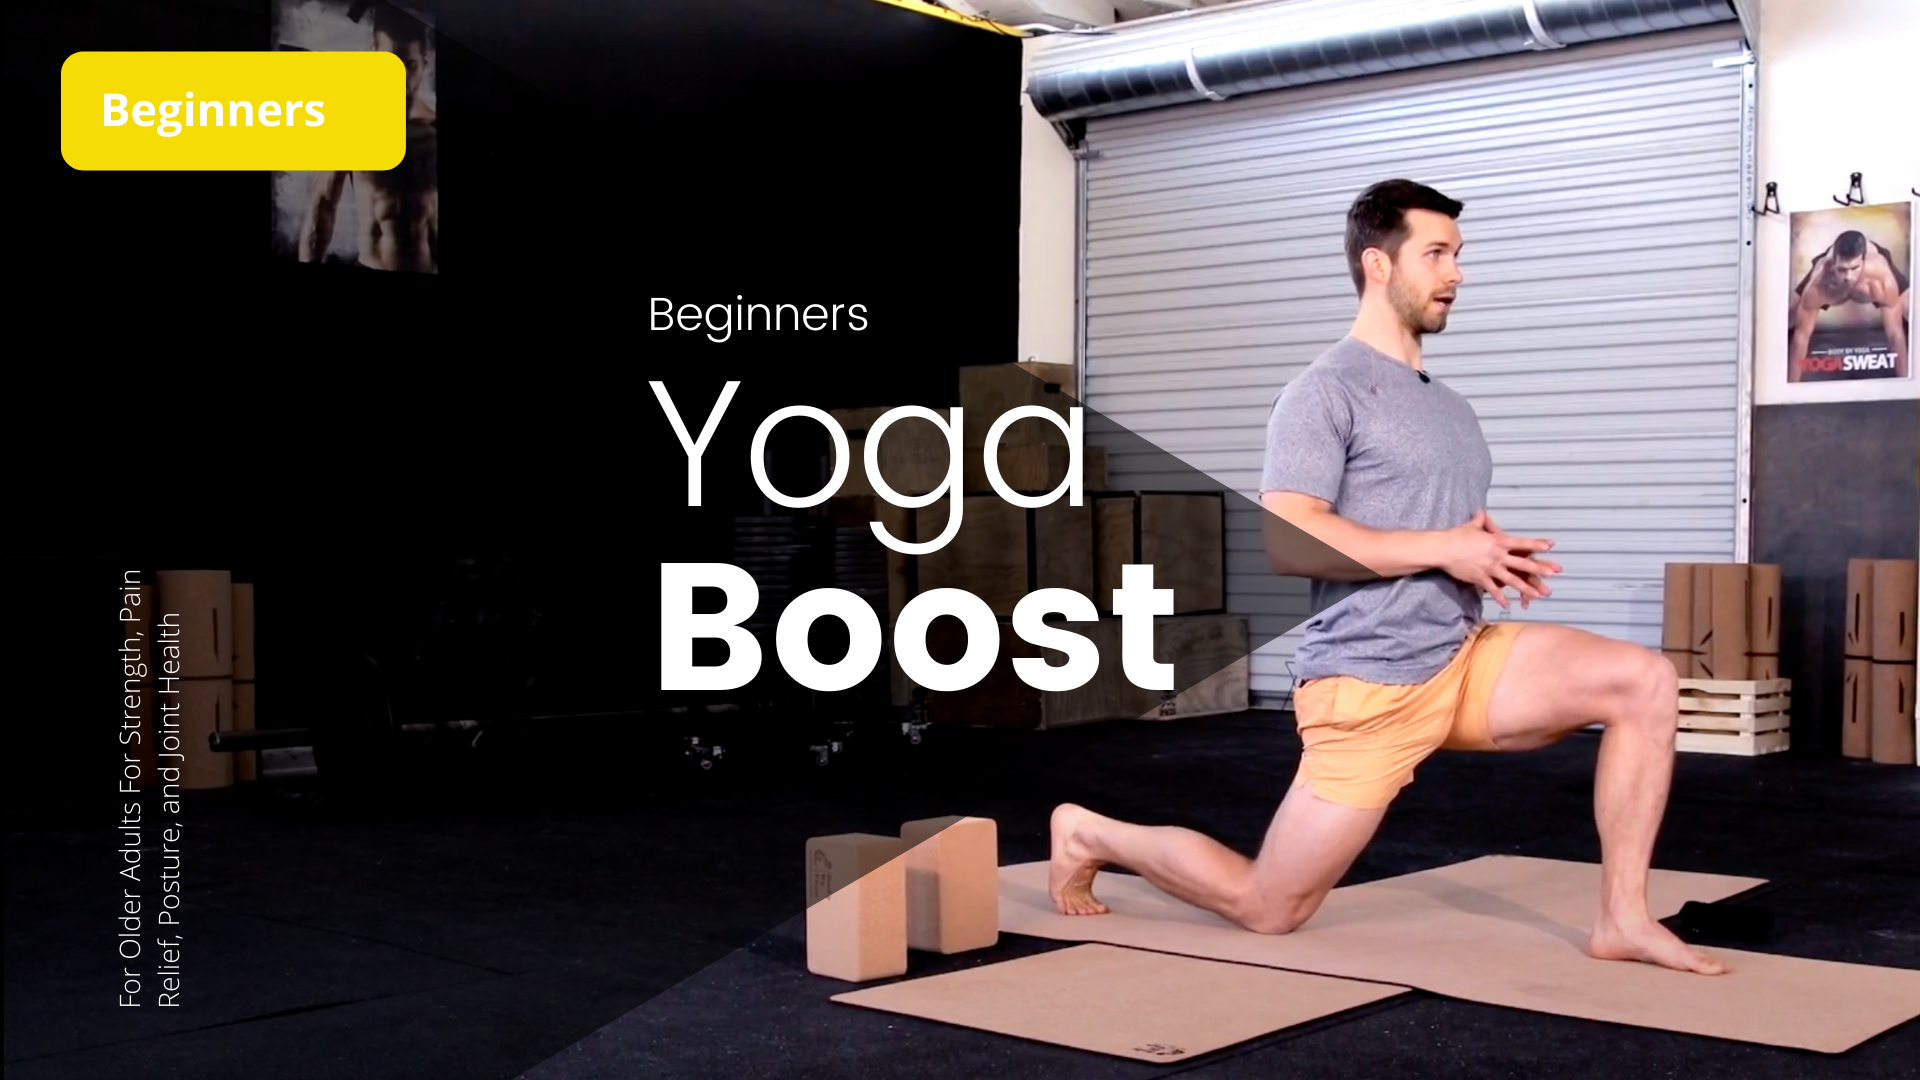 Yoga For Beginners, Yoga Boost